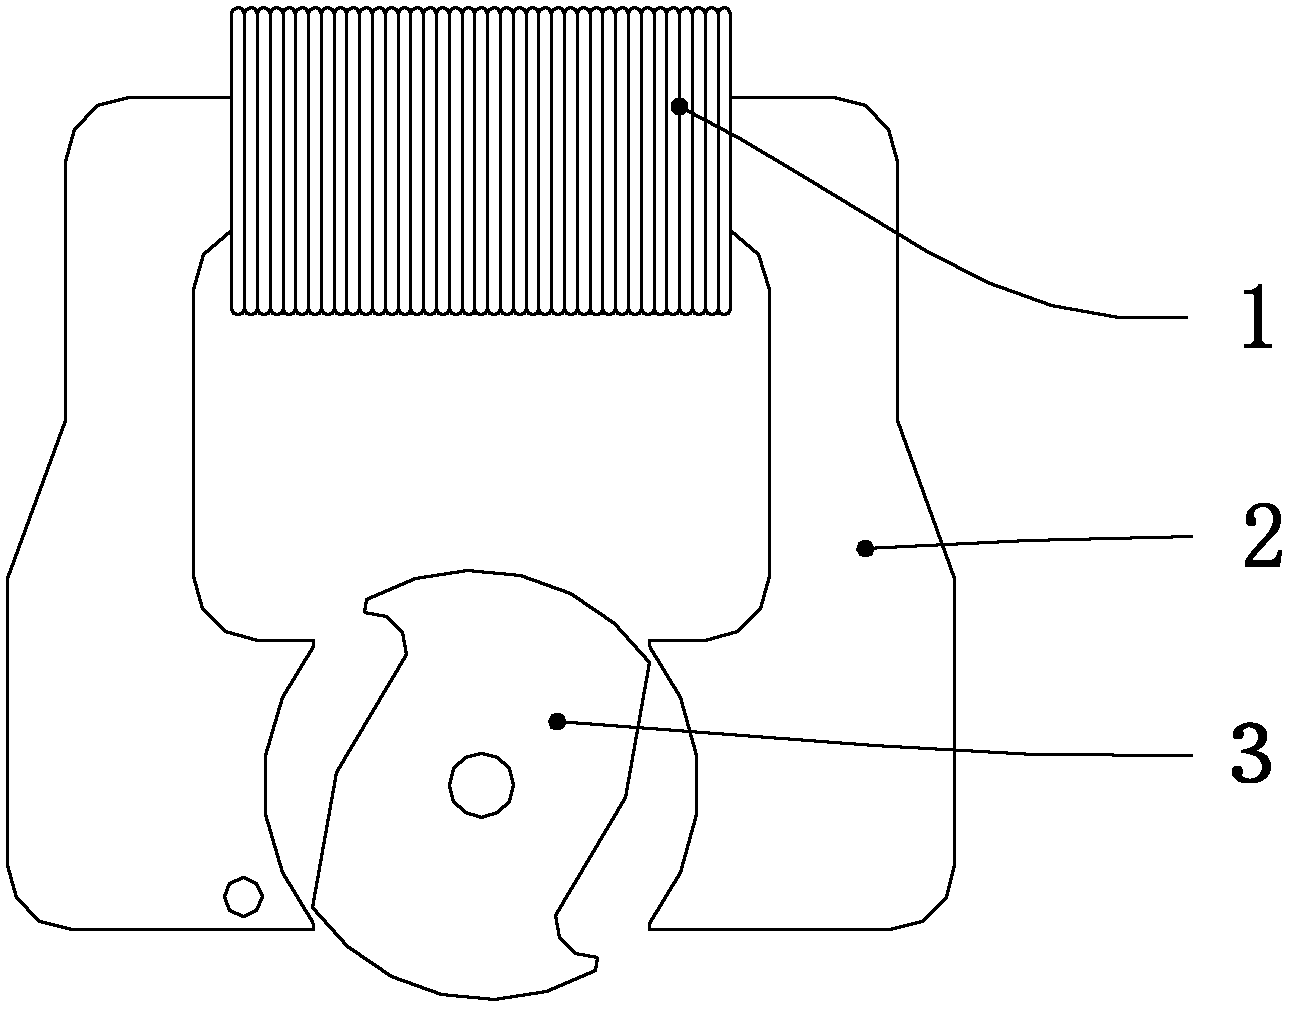 Electric egr valve driven by torsion motor